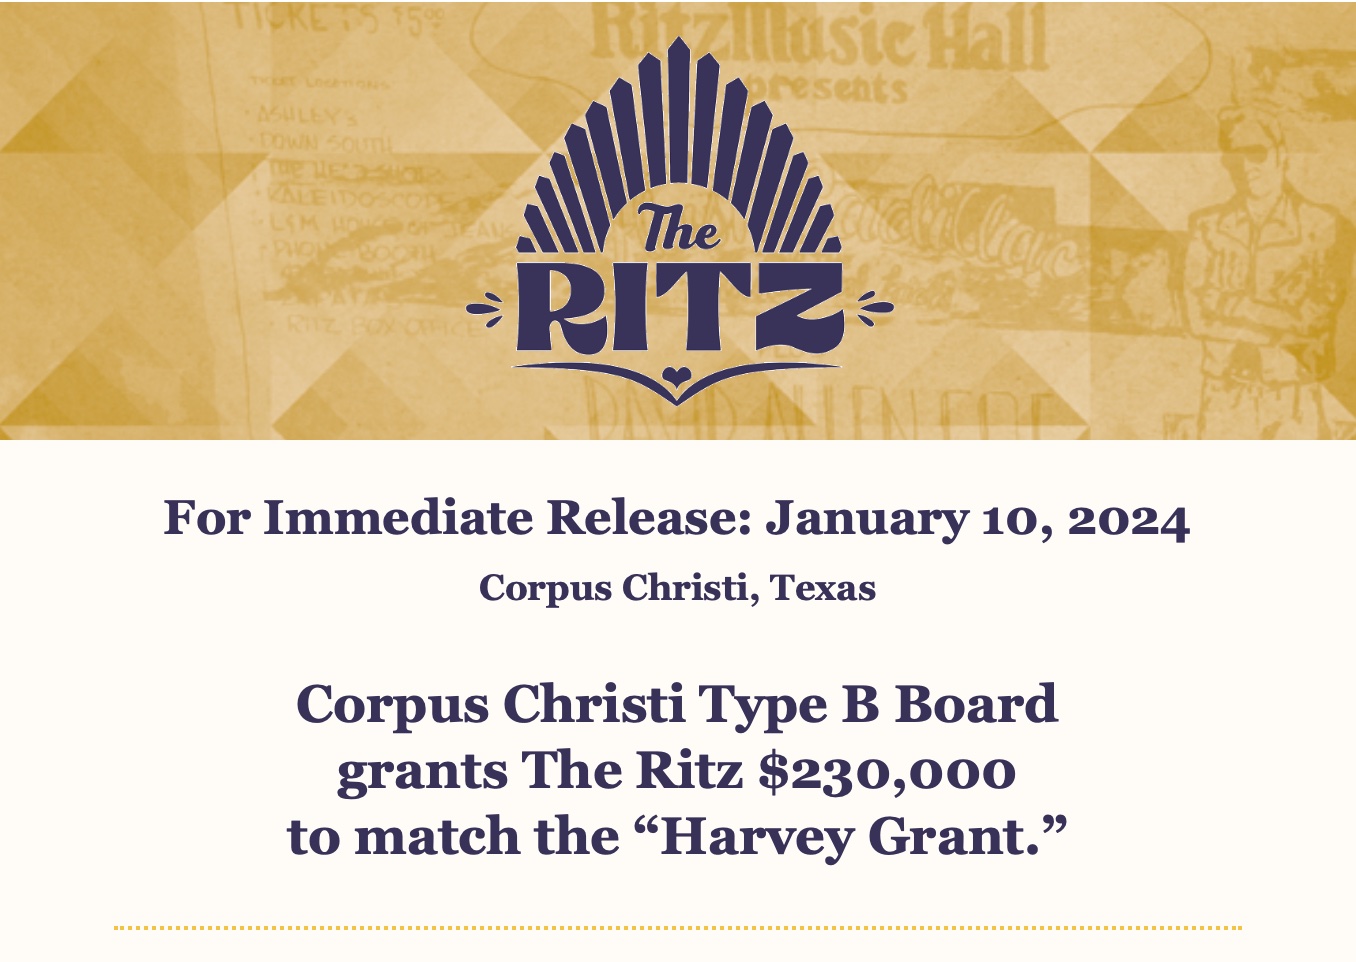 Corpus Christi Type B Board grants The Ritz $230,000